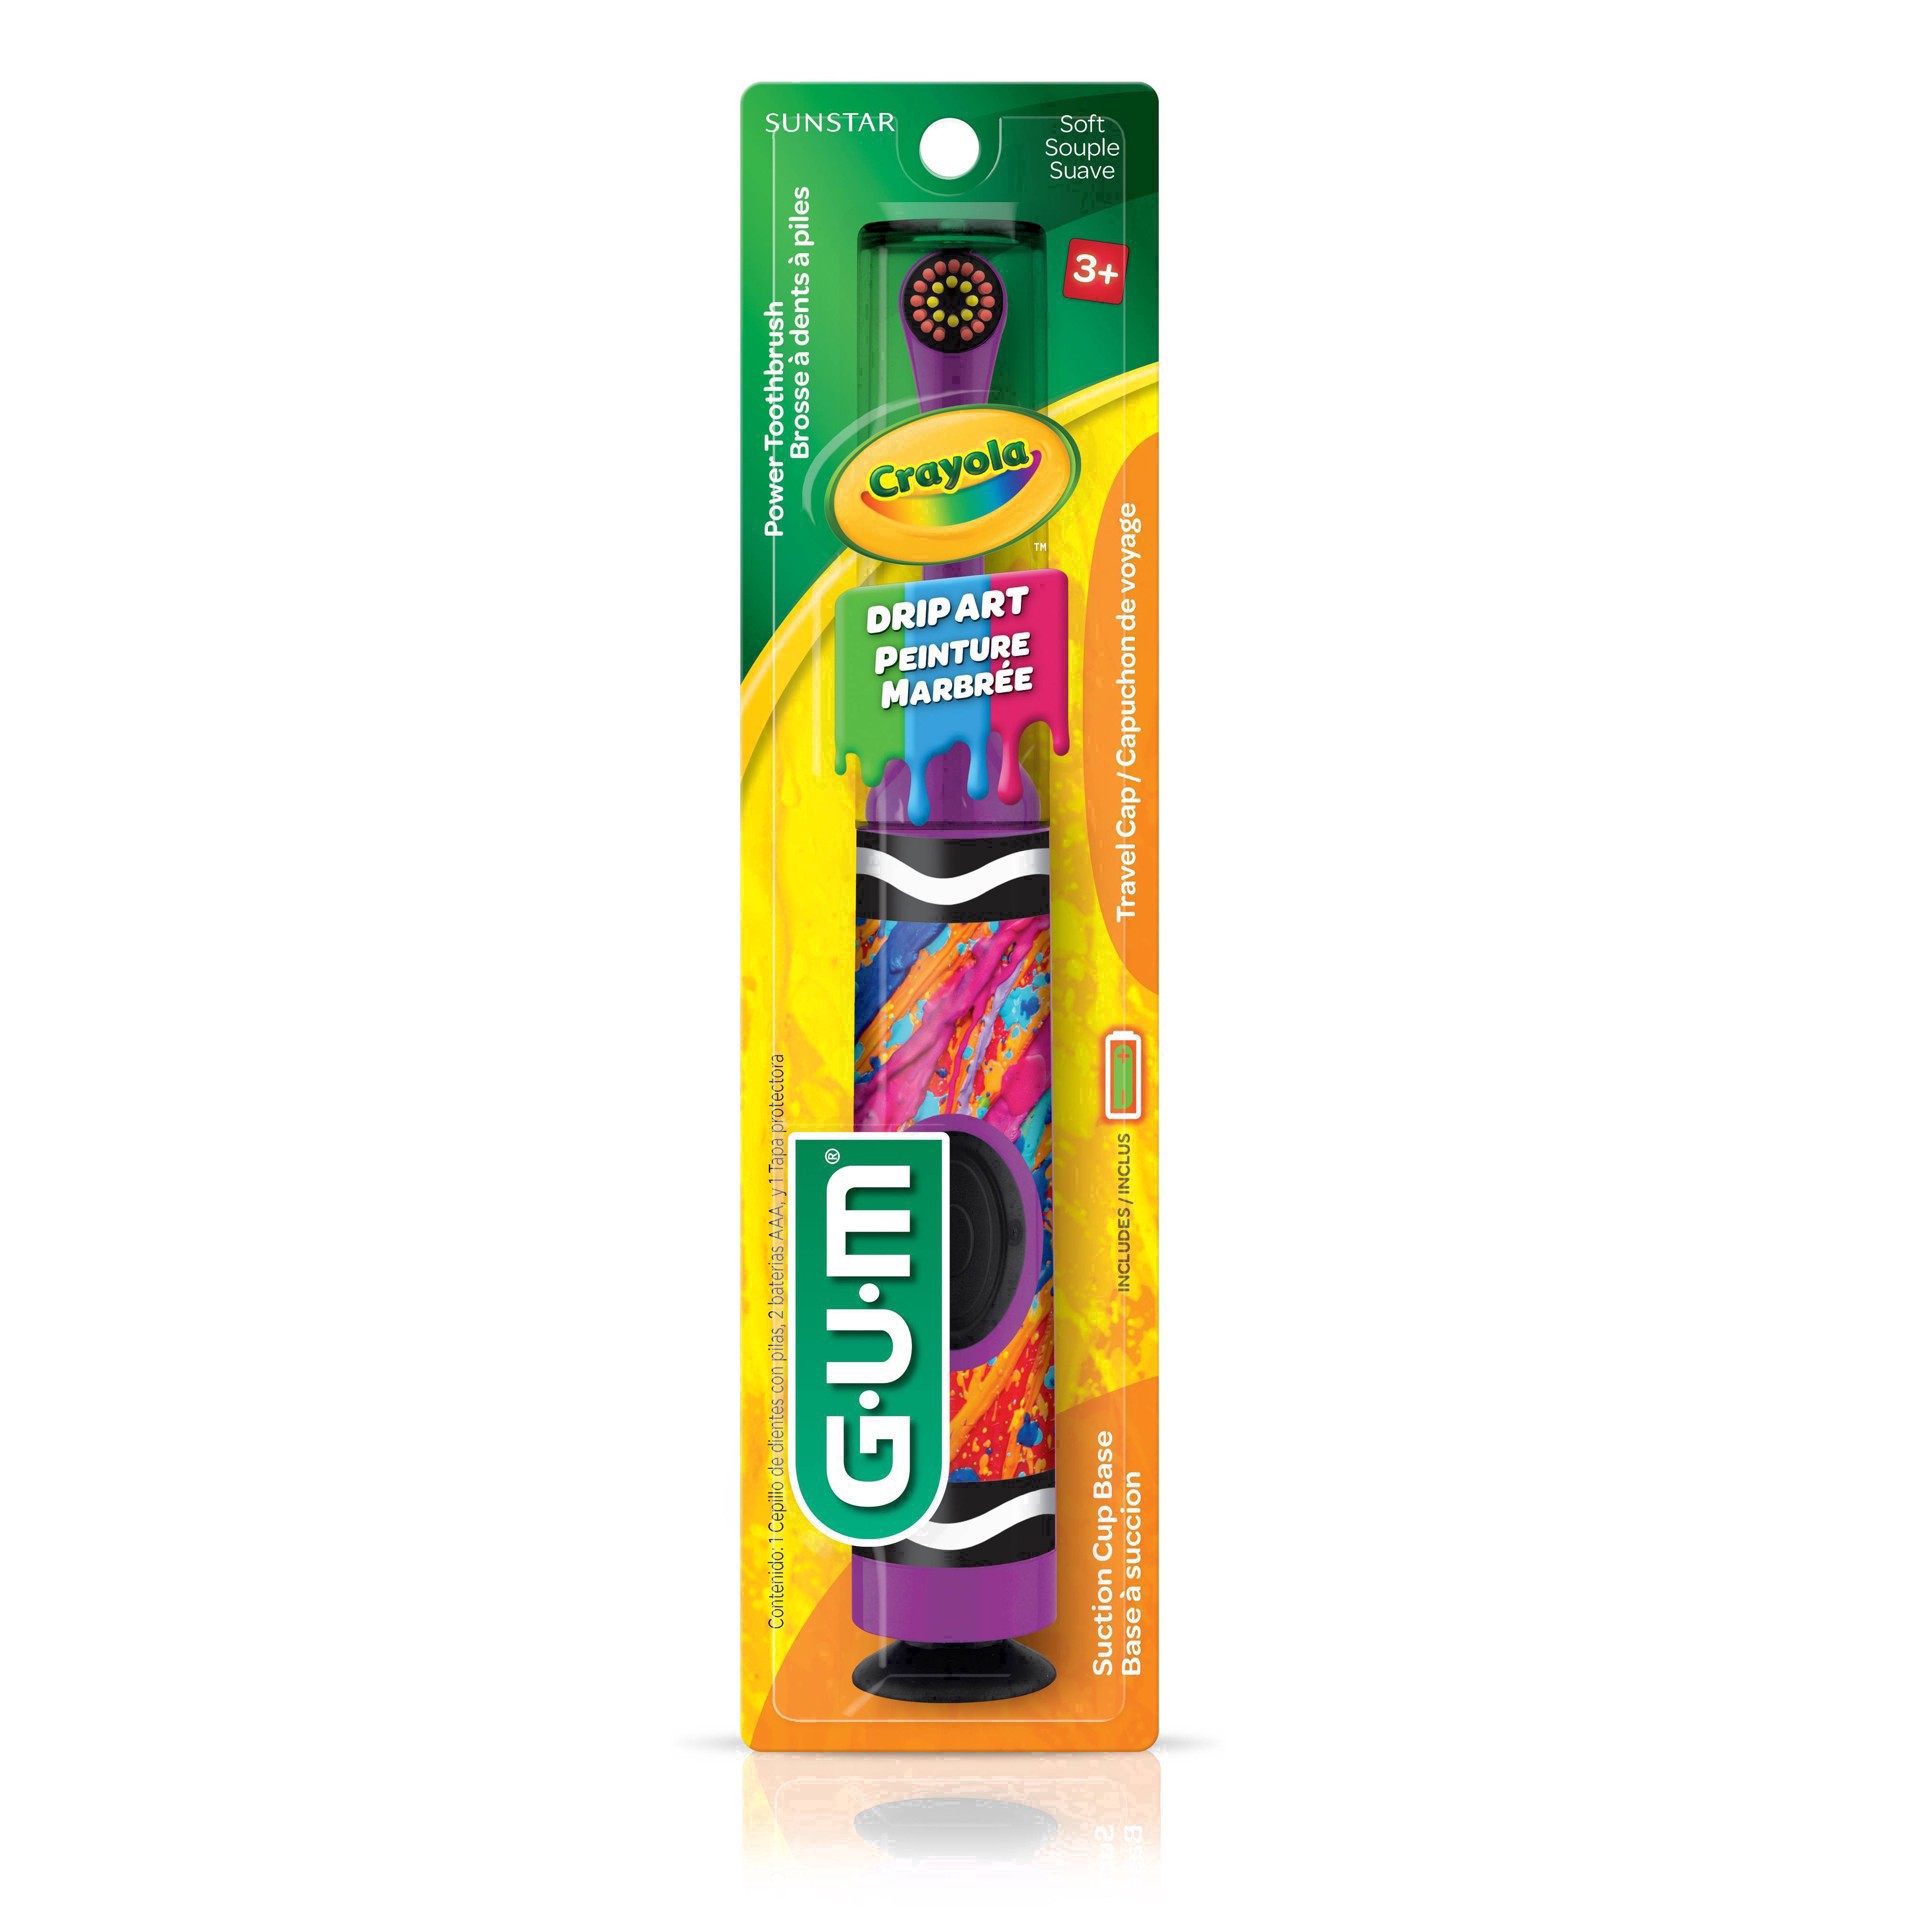 slide 37 of 50, G-U-M Crayola Electric Toothbrush, 1 ct